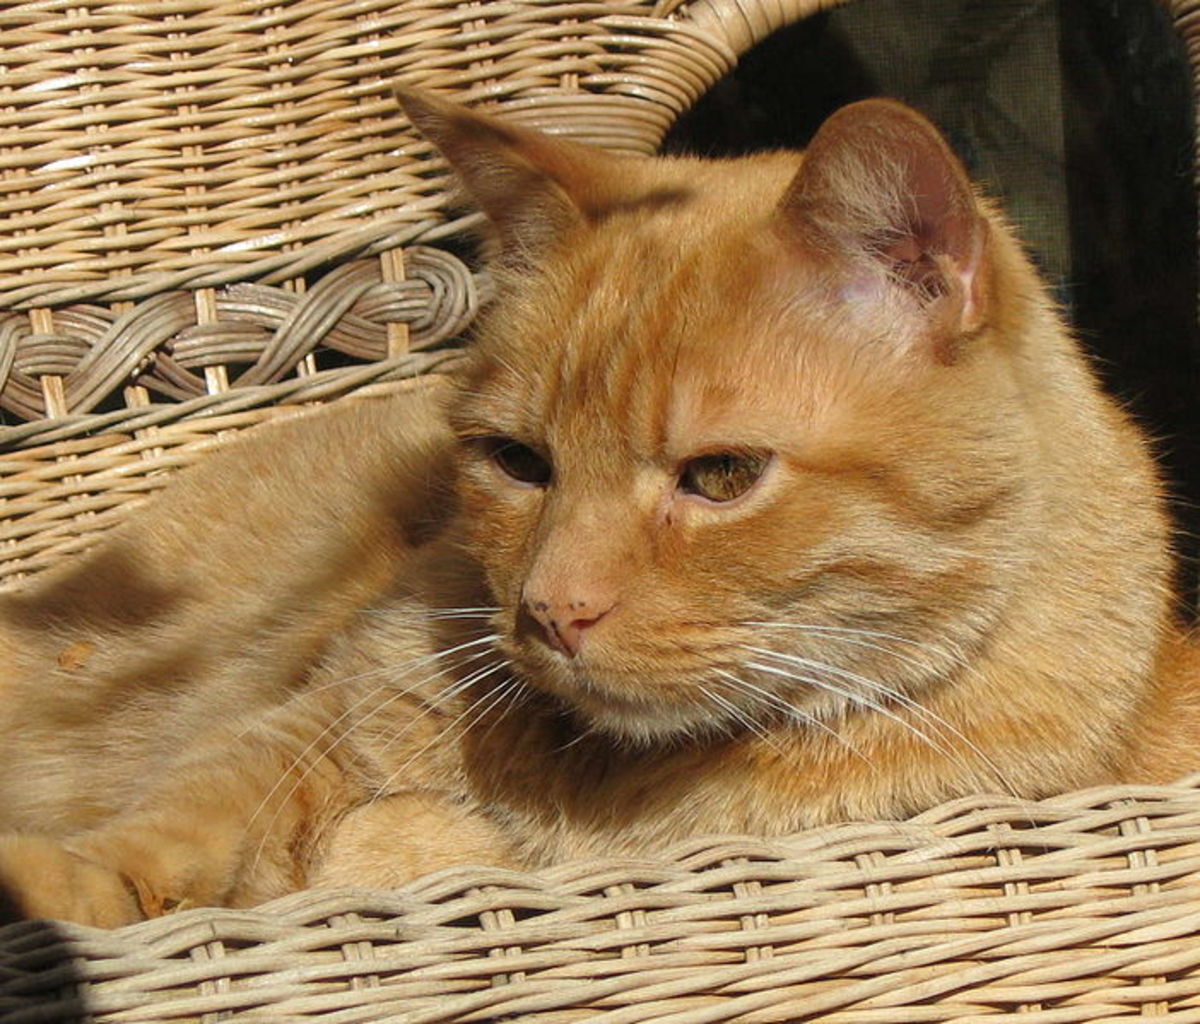 What are good orange cat names? | PetHelpful